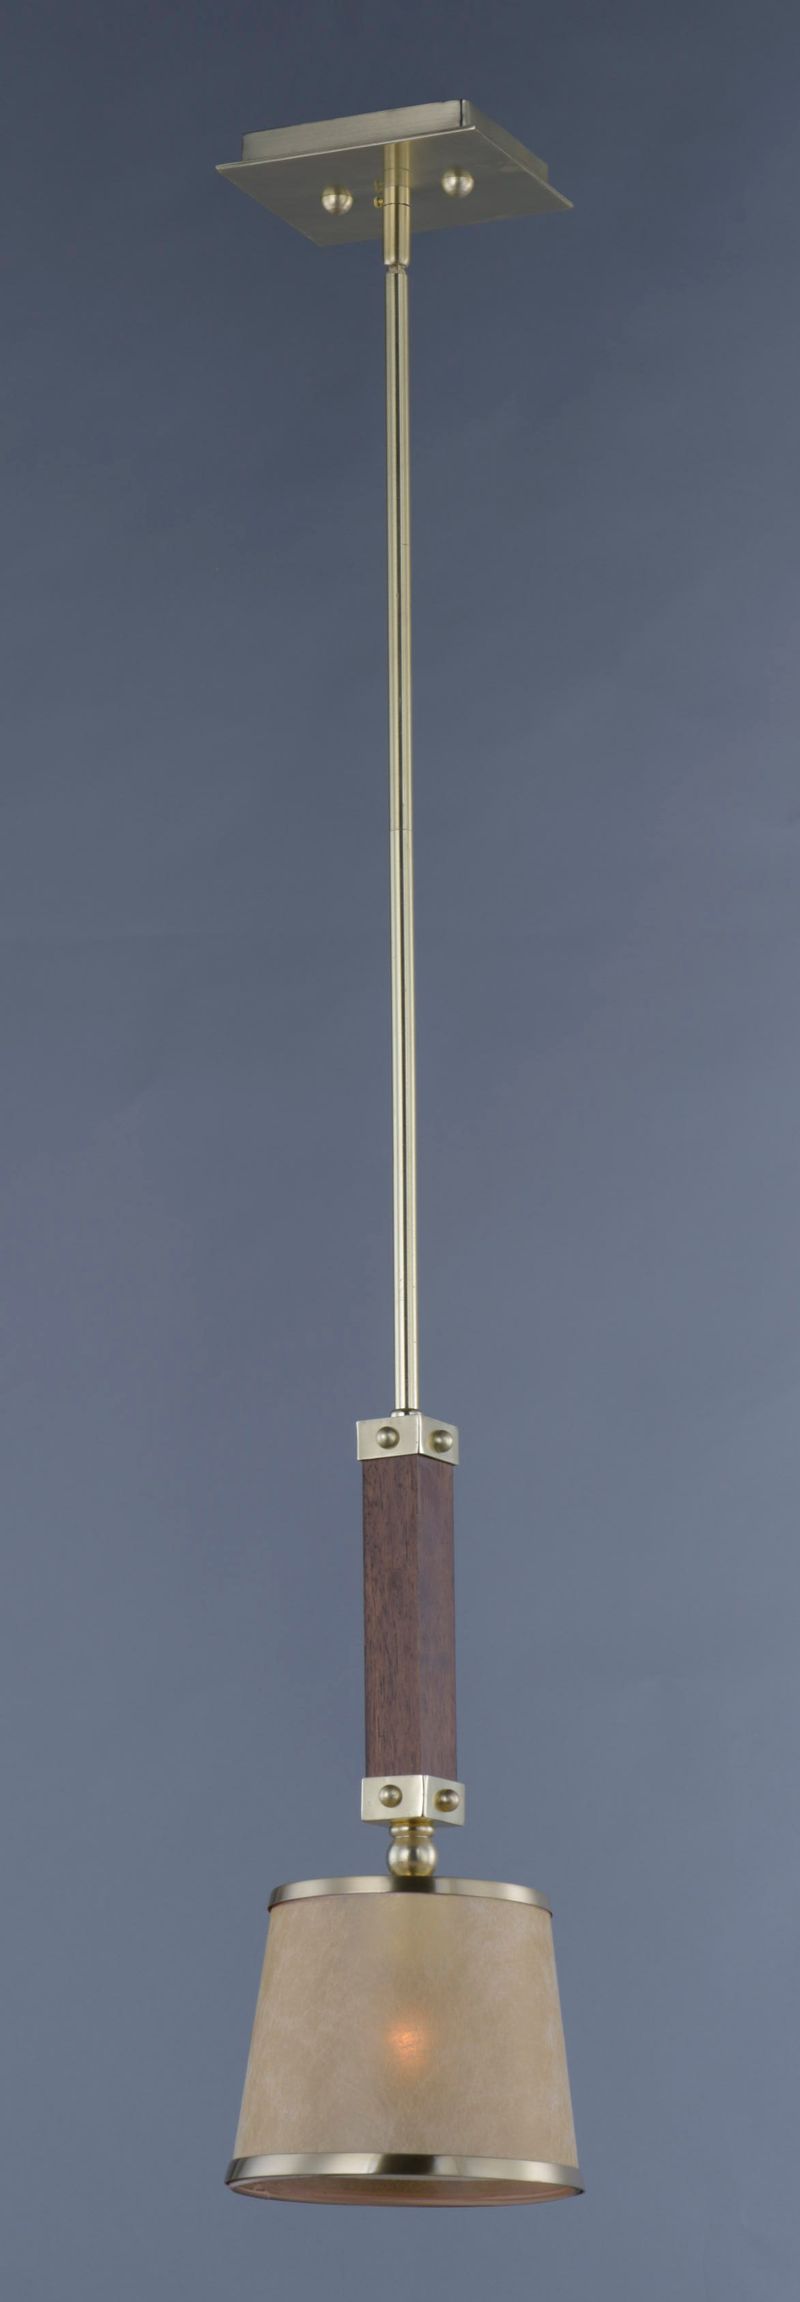 Maritime 7.5' Single Light Pendant in Antique Pecan and Satin Brass